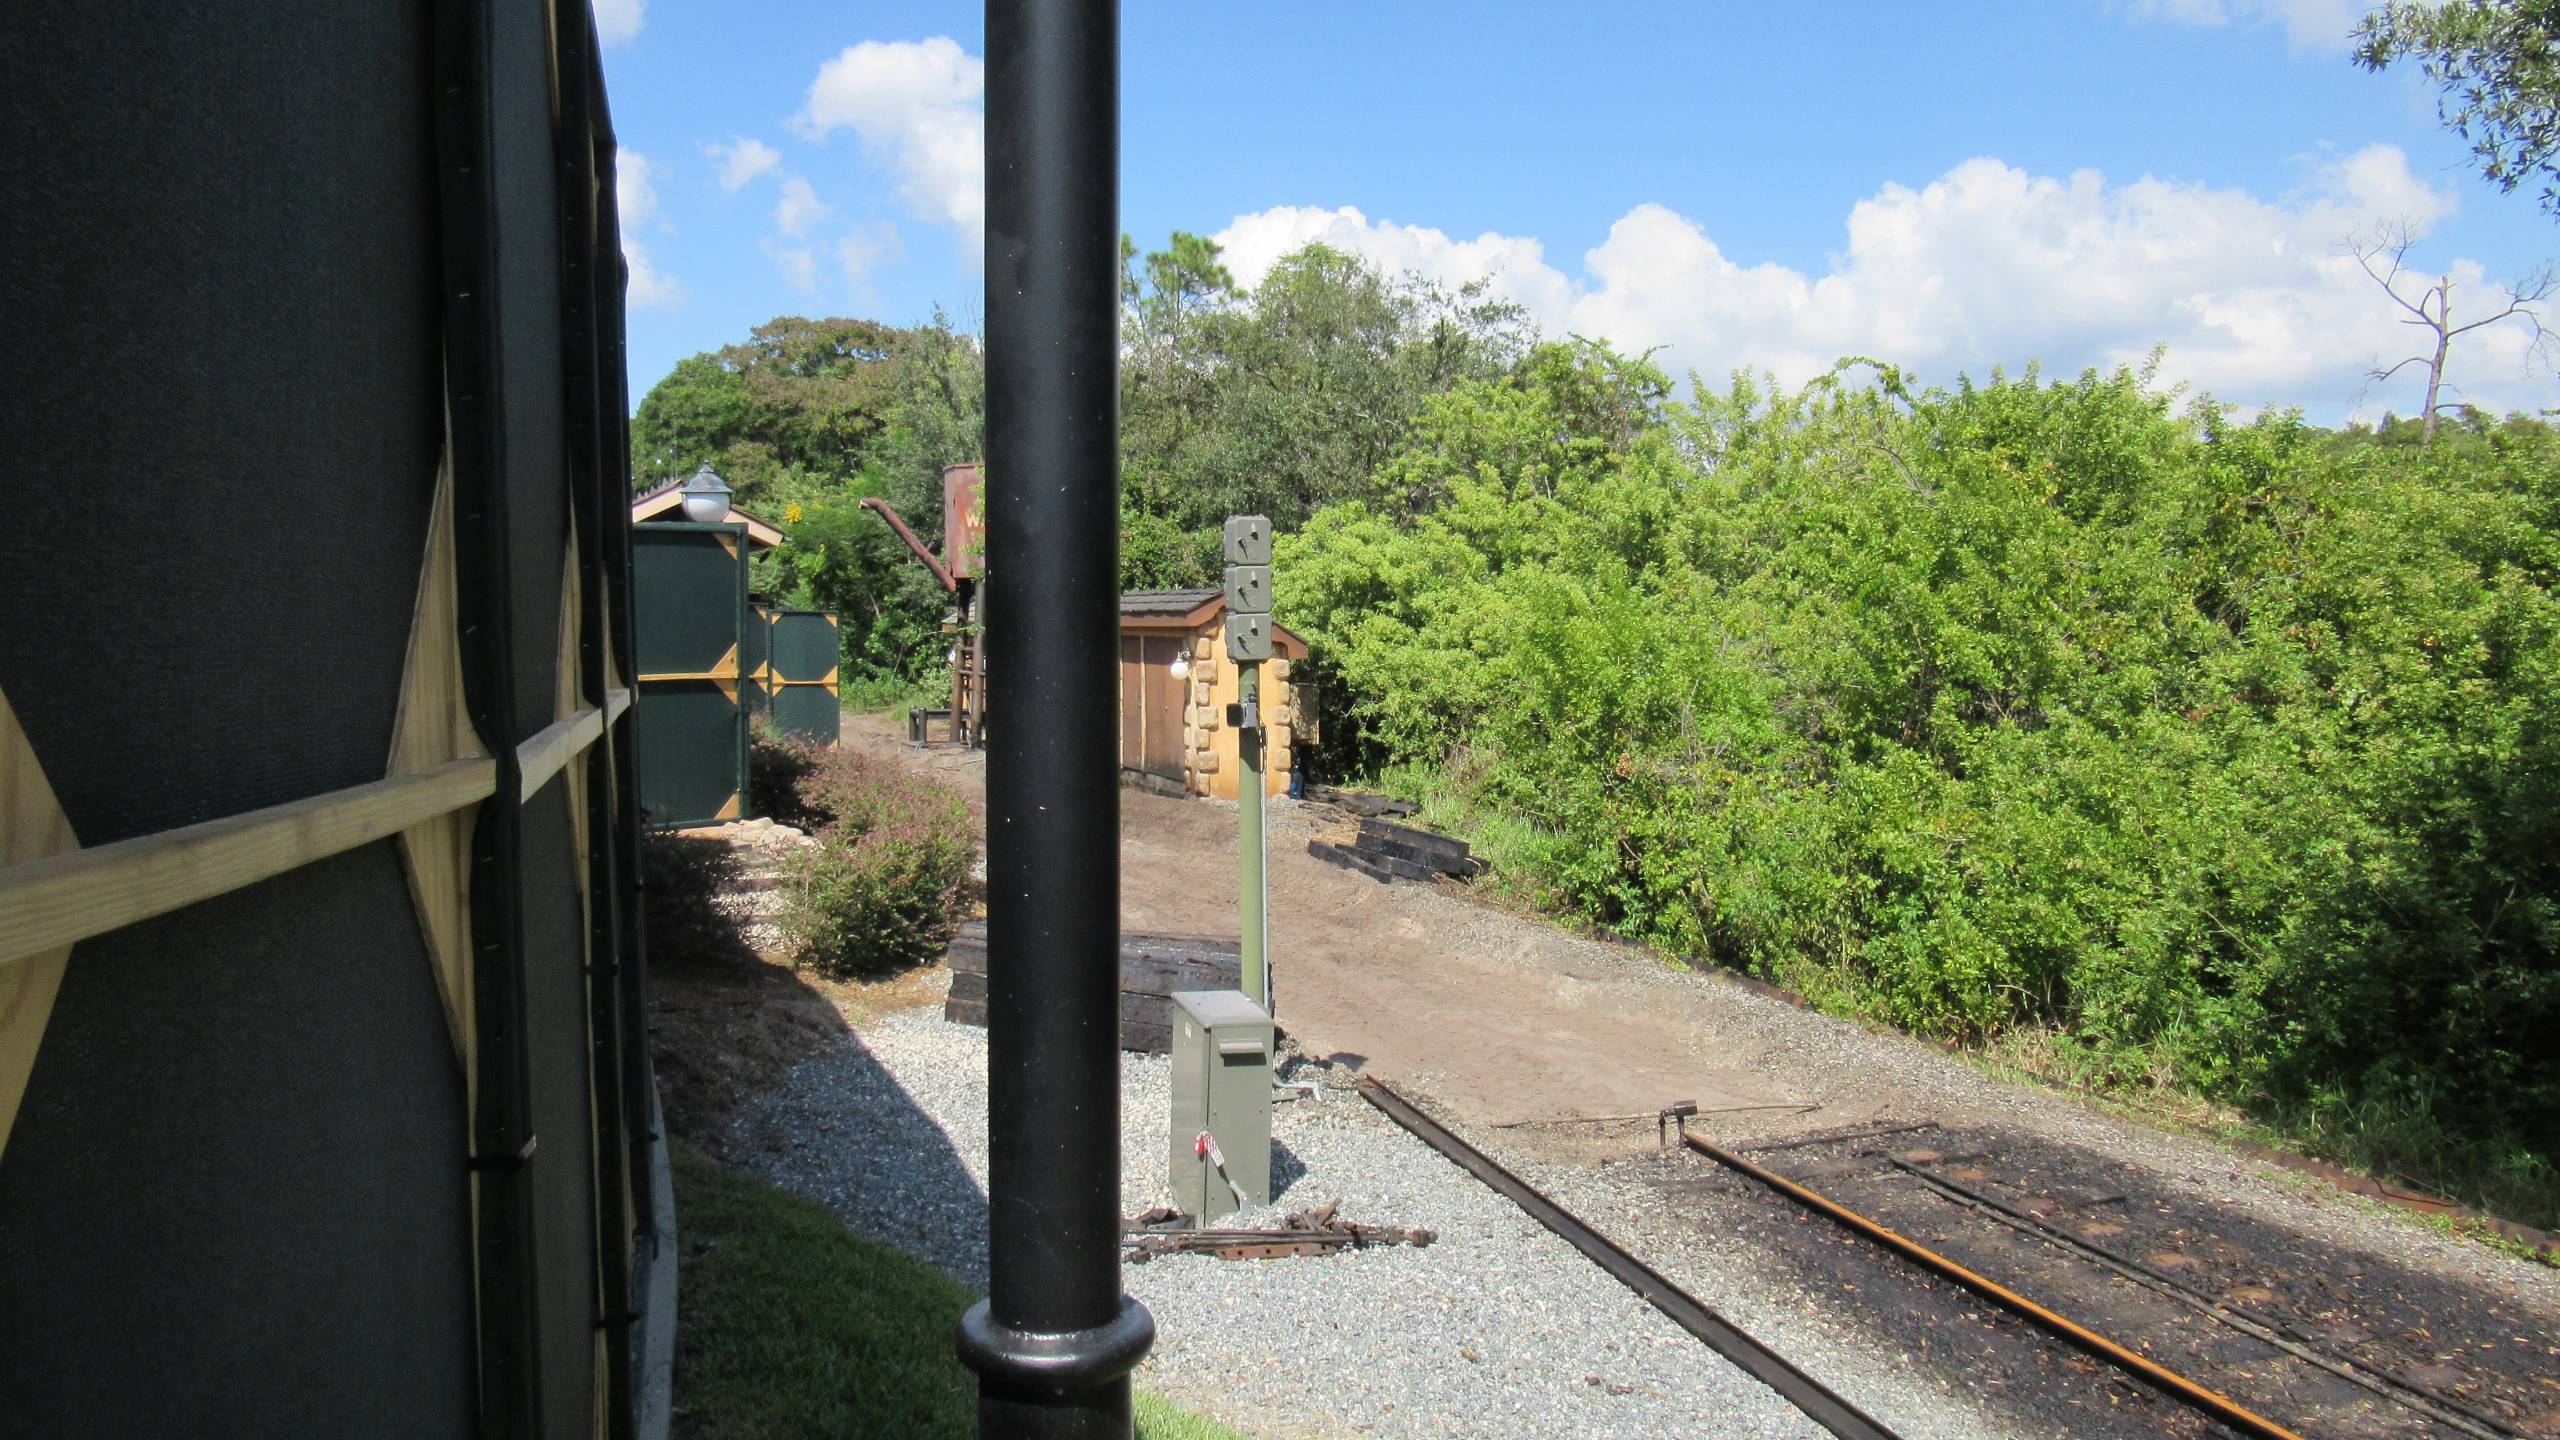 PHOTOS - A look at the Walt Disney World Railroad refurbishment